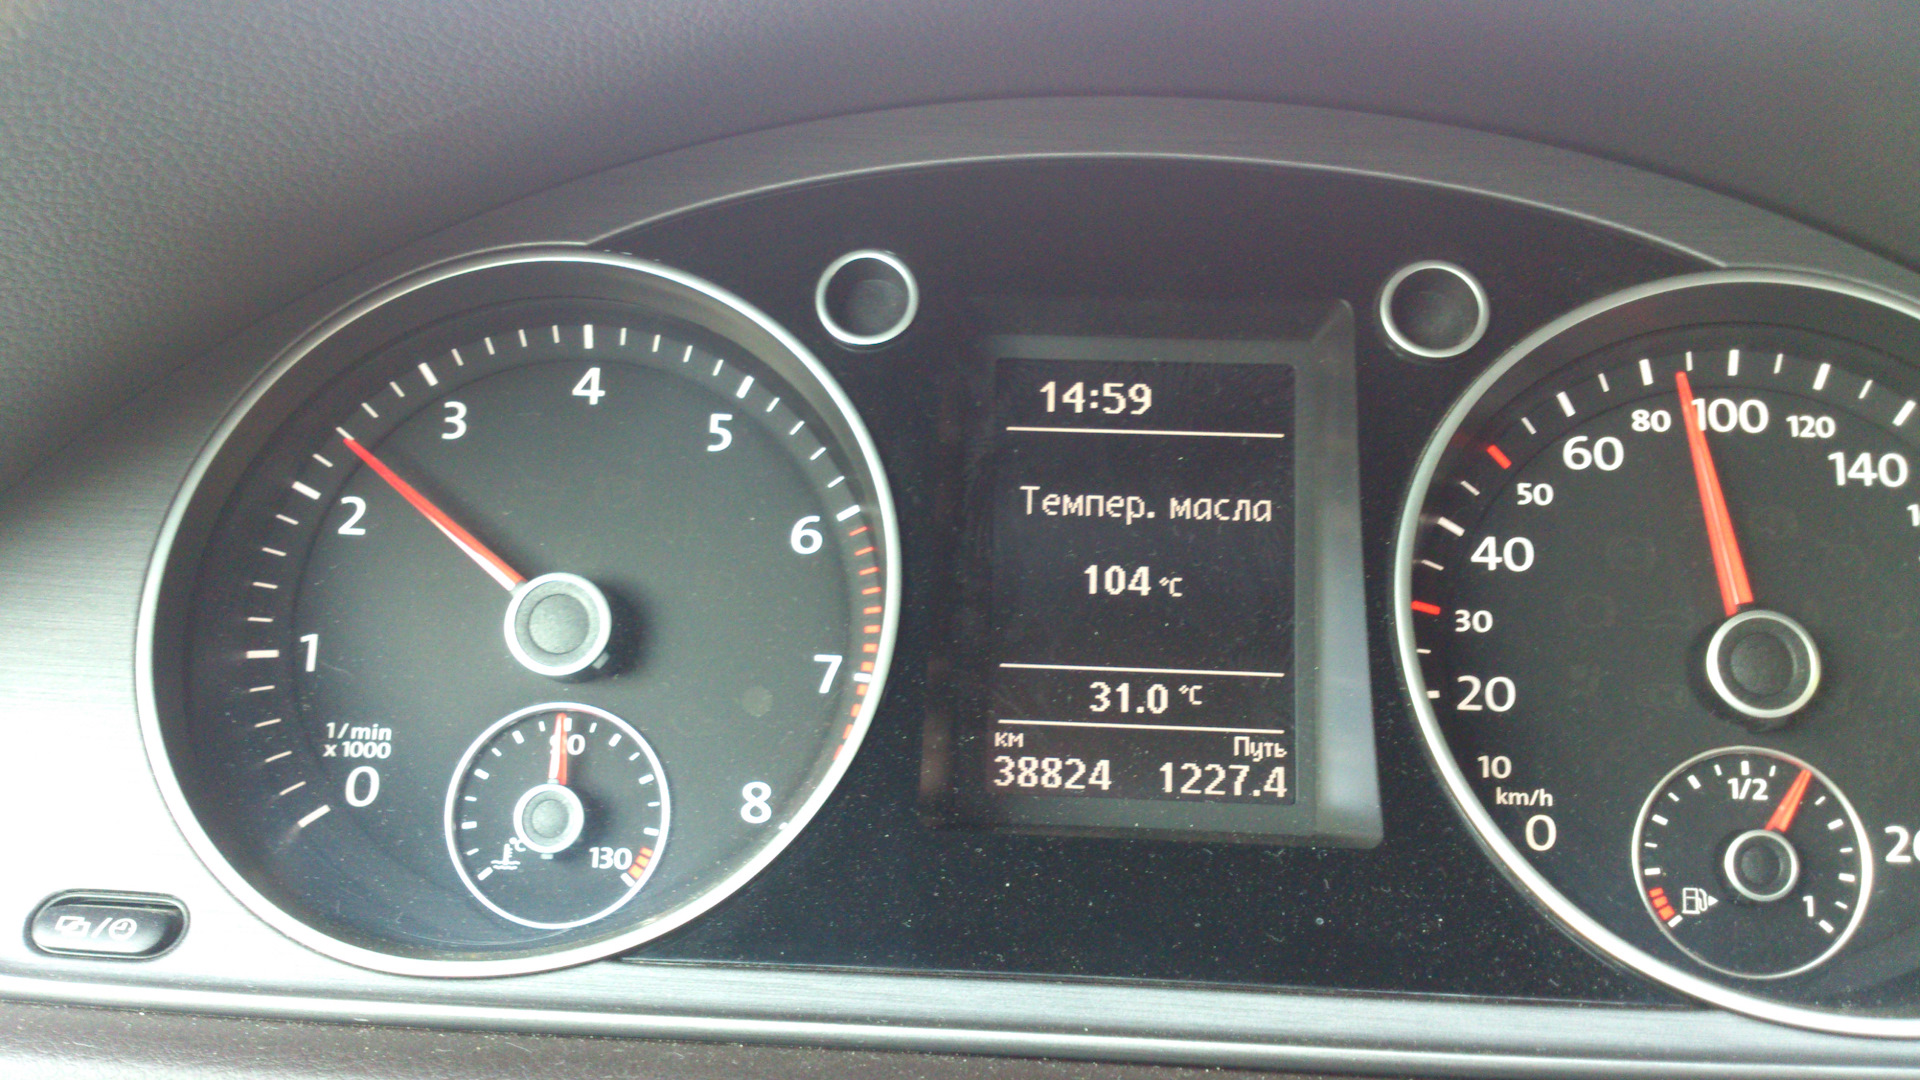 Температура масла bmw. Volkswagen Jetta 5 максидот. Passat b7 1.8 температура масла в Мороз. Температура масла Пассат б7. Температура масла в WV b7 121 градус.